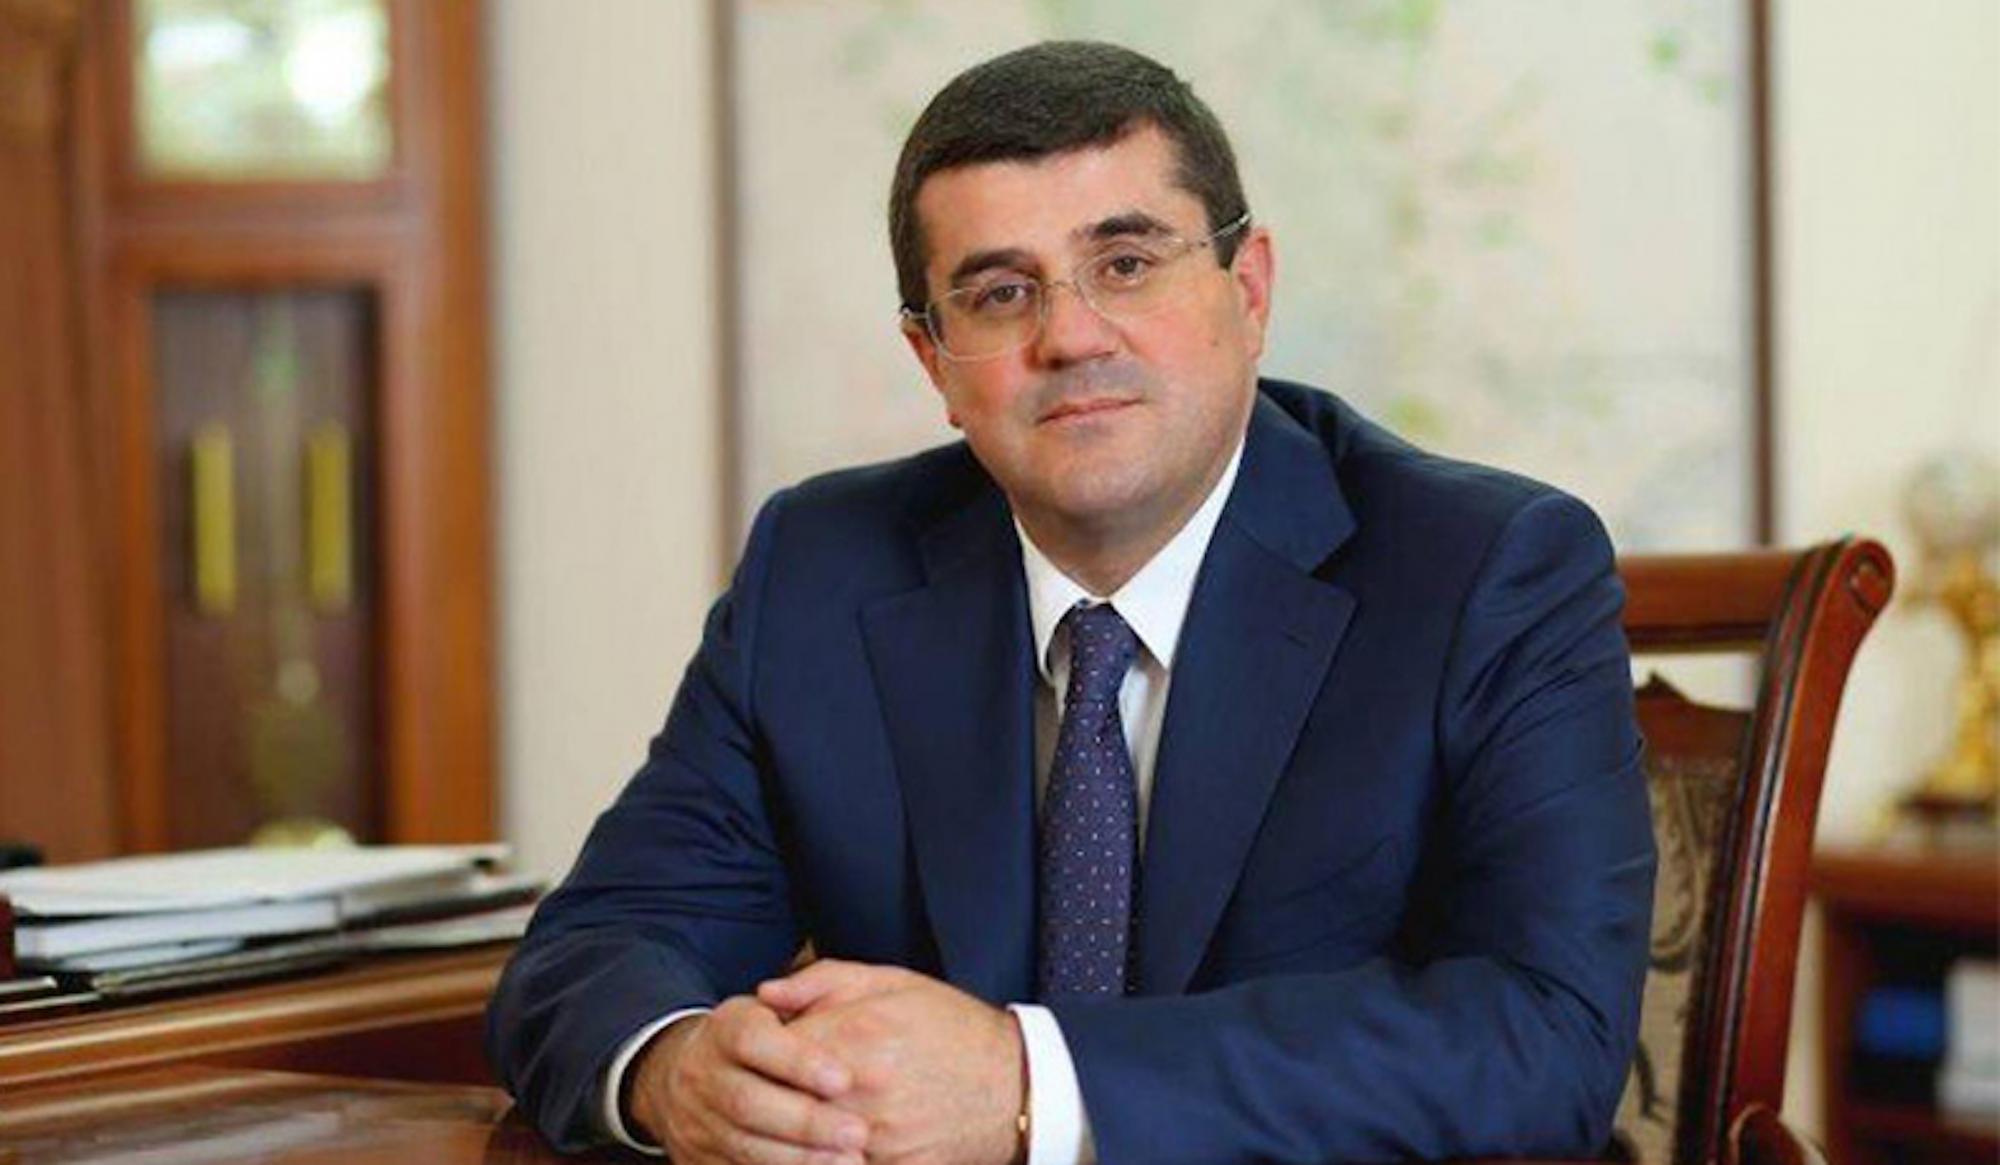 “I warned about lack of manpower on October 3”, Karabakh President